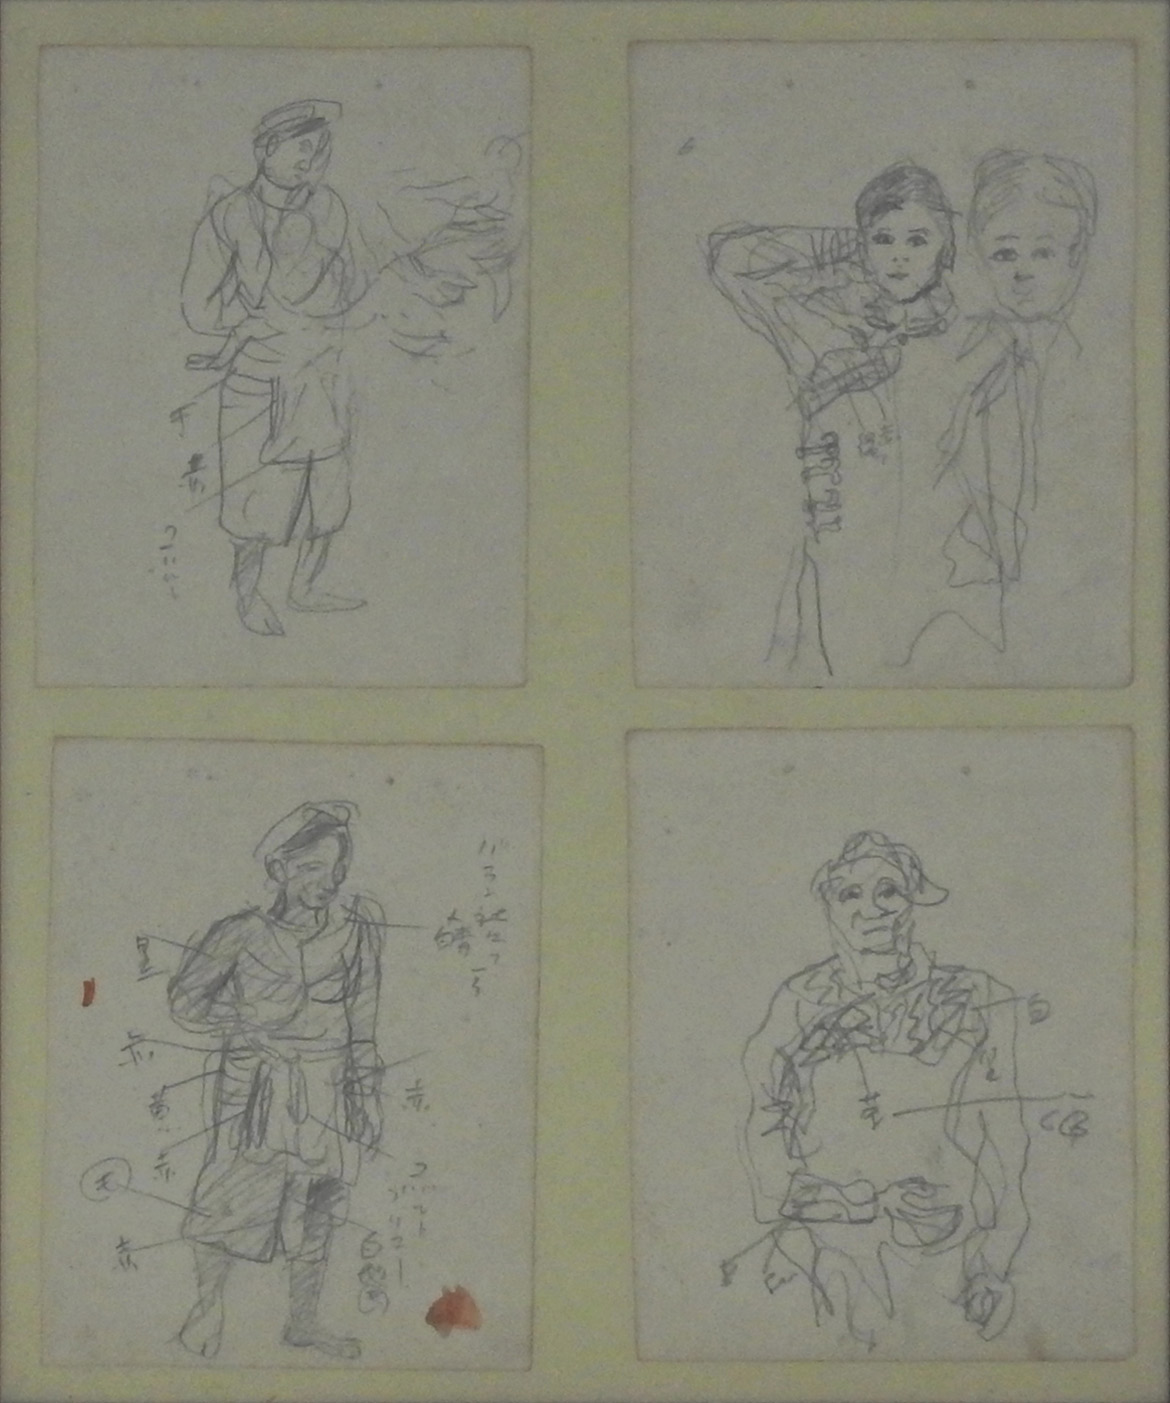 Sketch (People in Mala) 4 sheets set